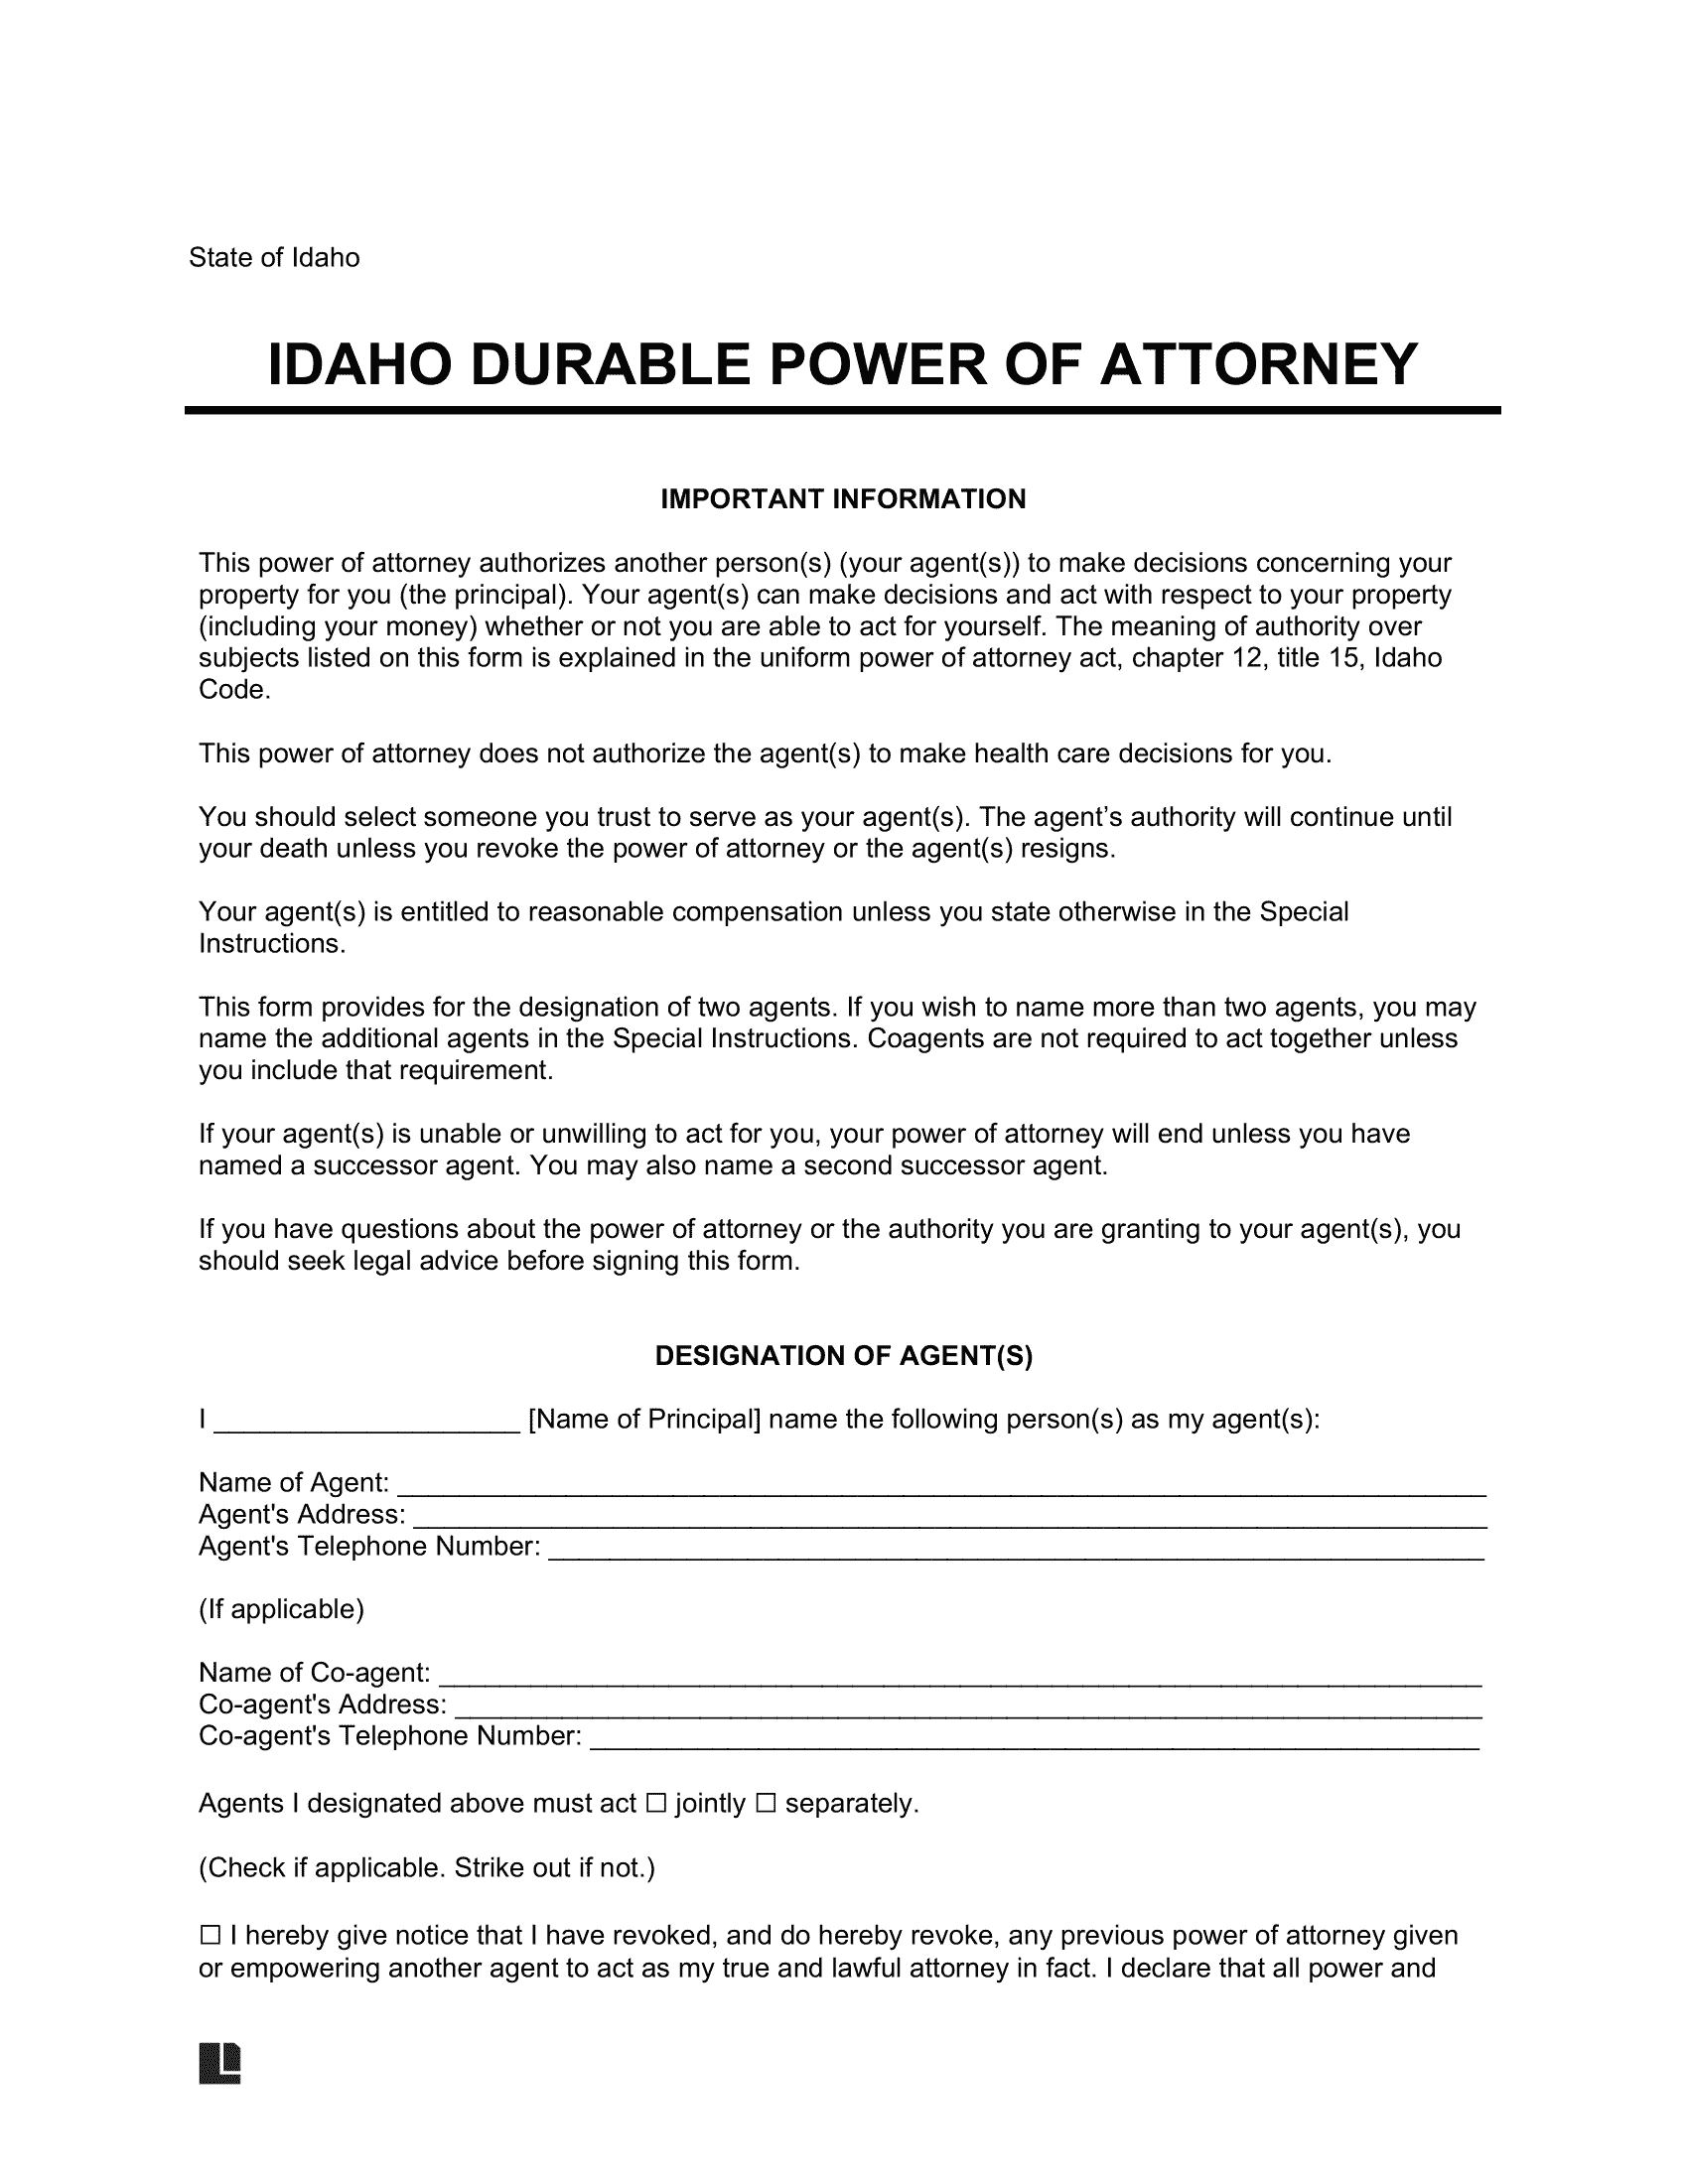 Idaho Durable Statutory Power of Attorney Form